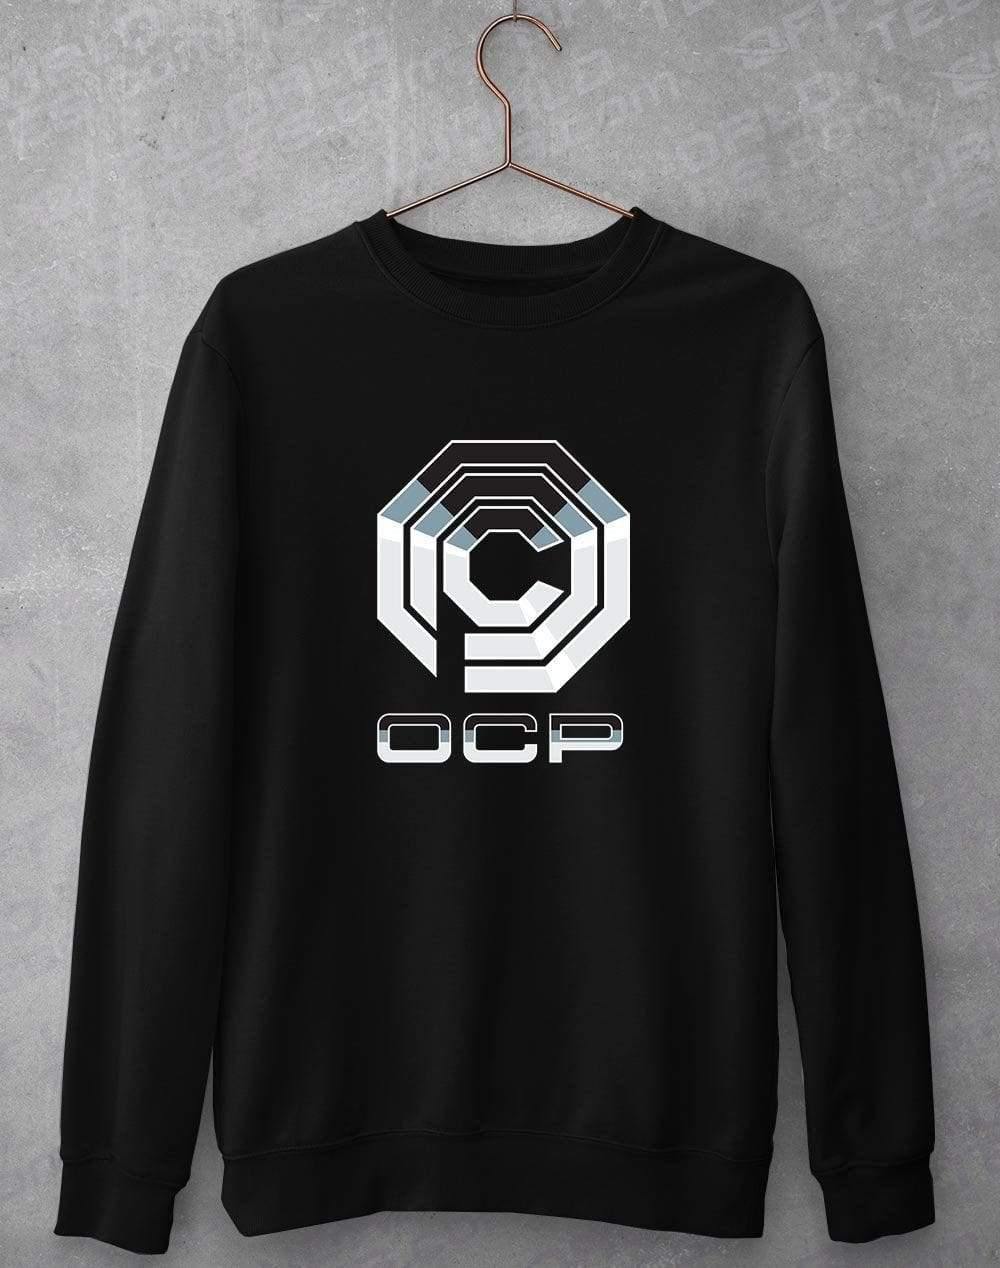 Omni Consumer Products Sweatshirt S / Black  - Off World Tees